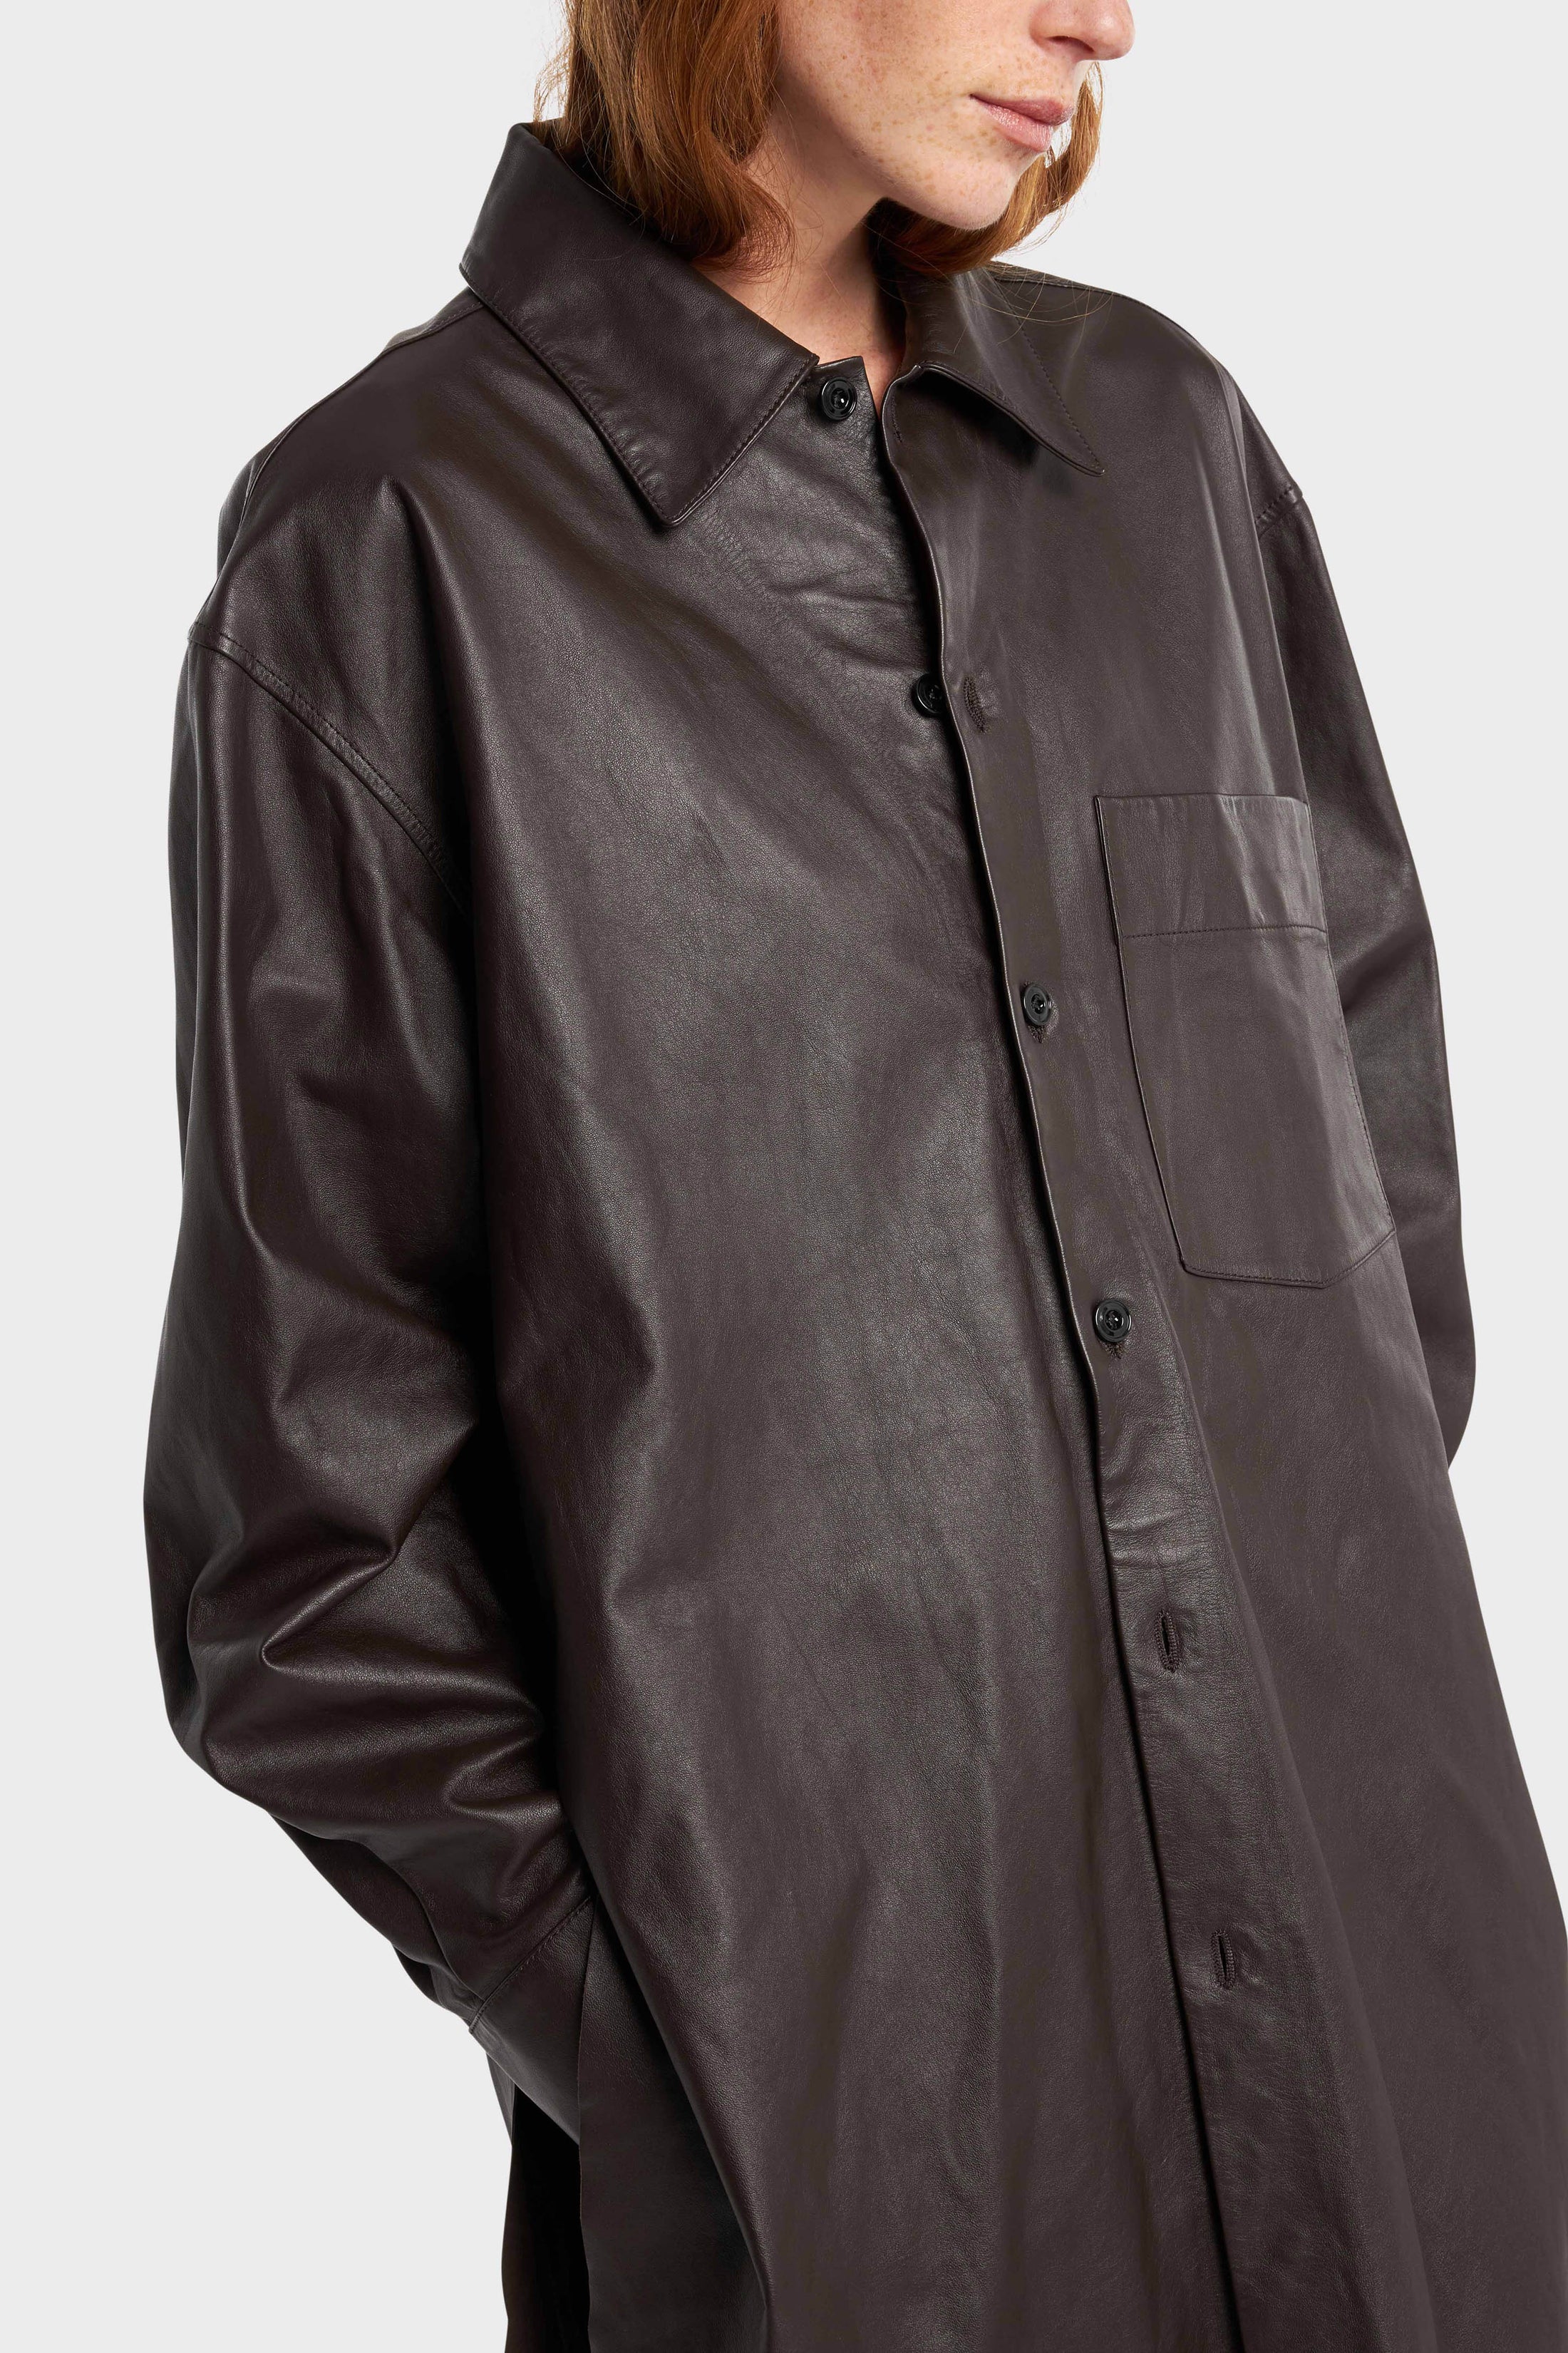 Leather side-slits shirt